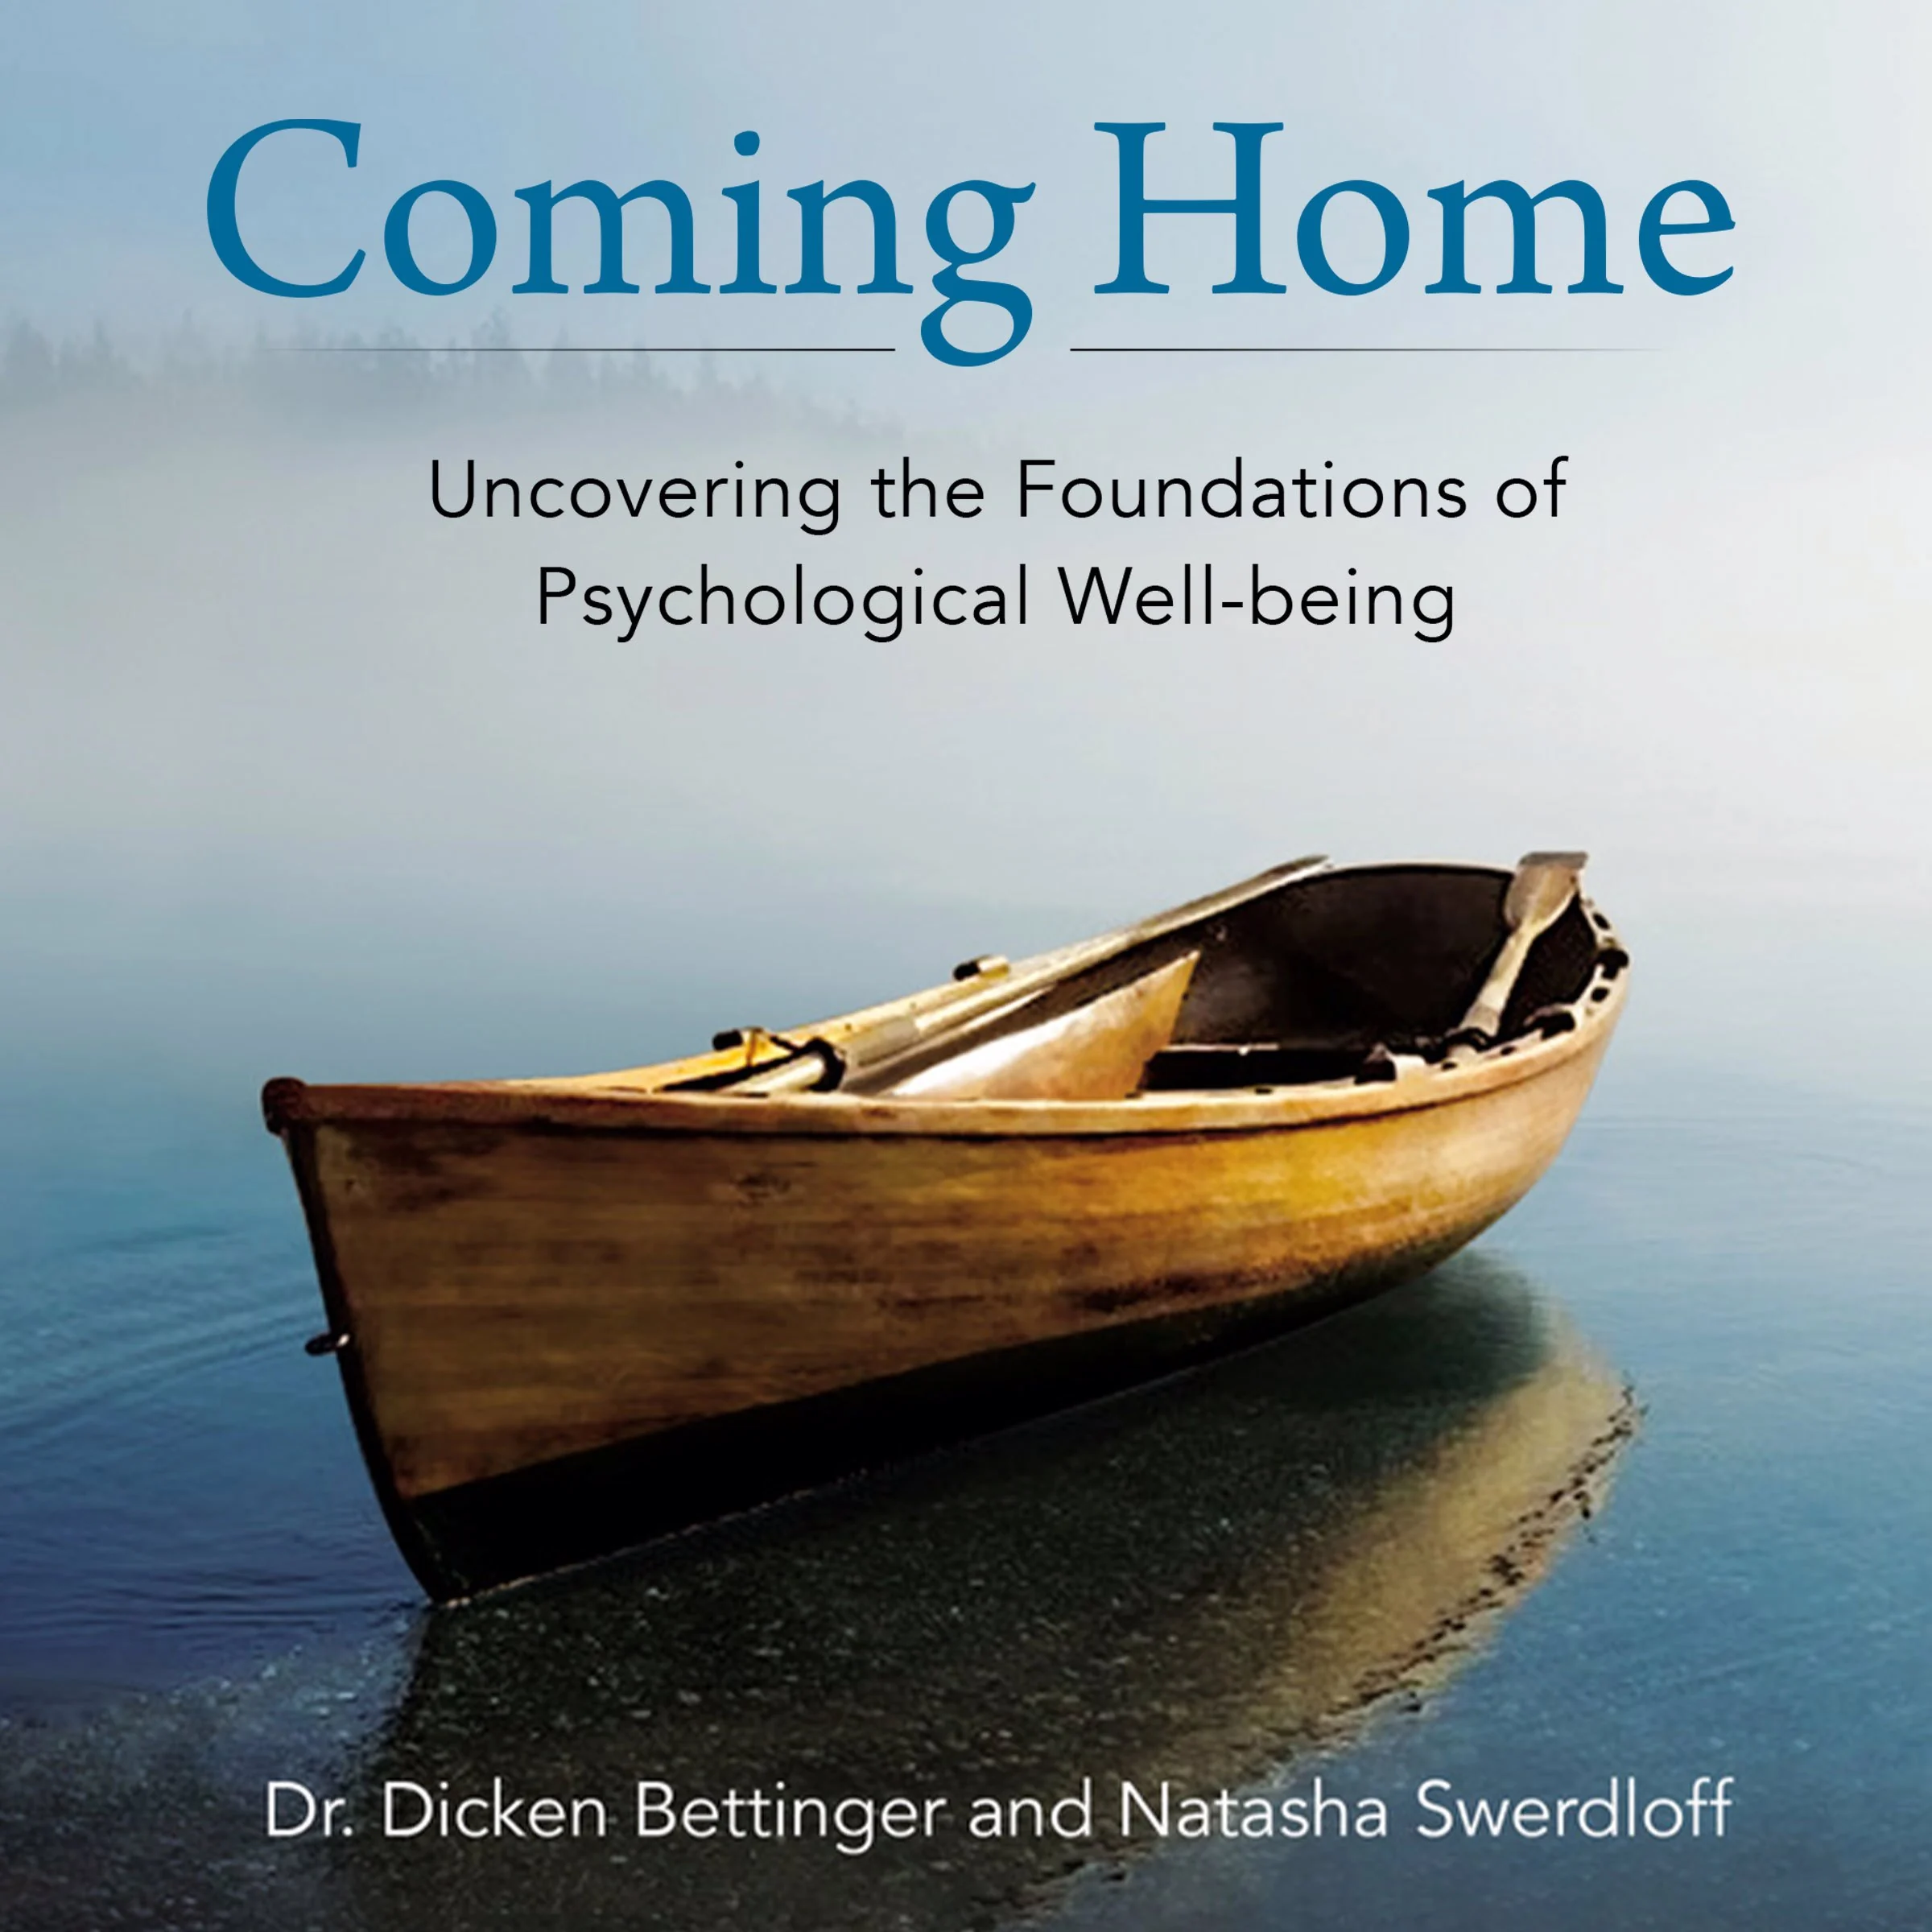 Coming Home Audiobook by Natasha Swerdloff